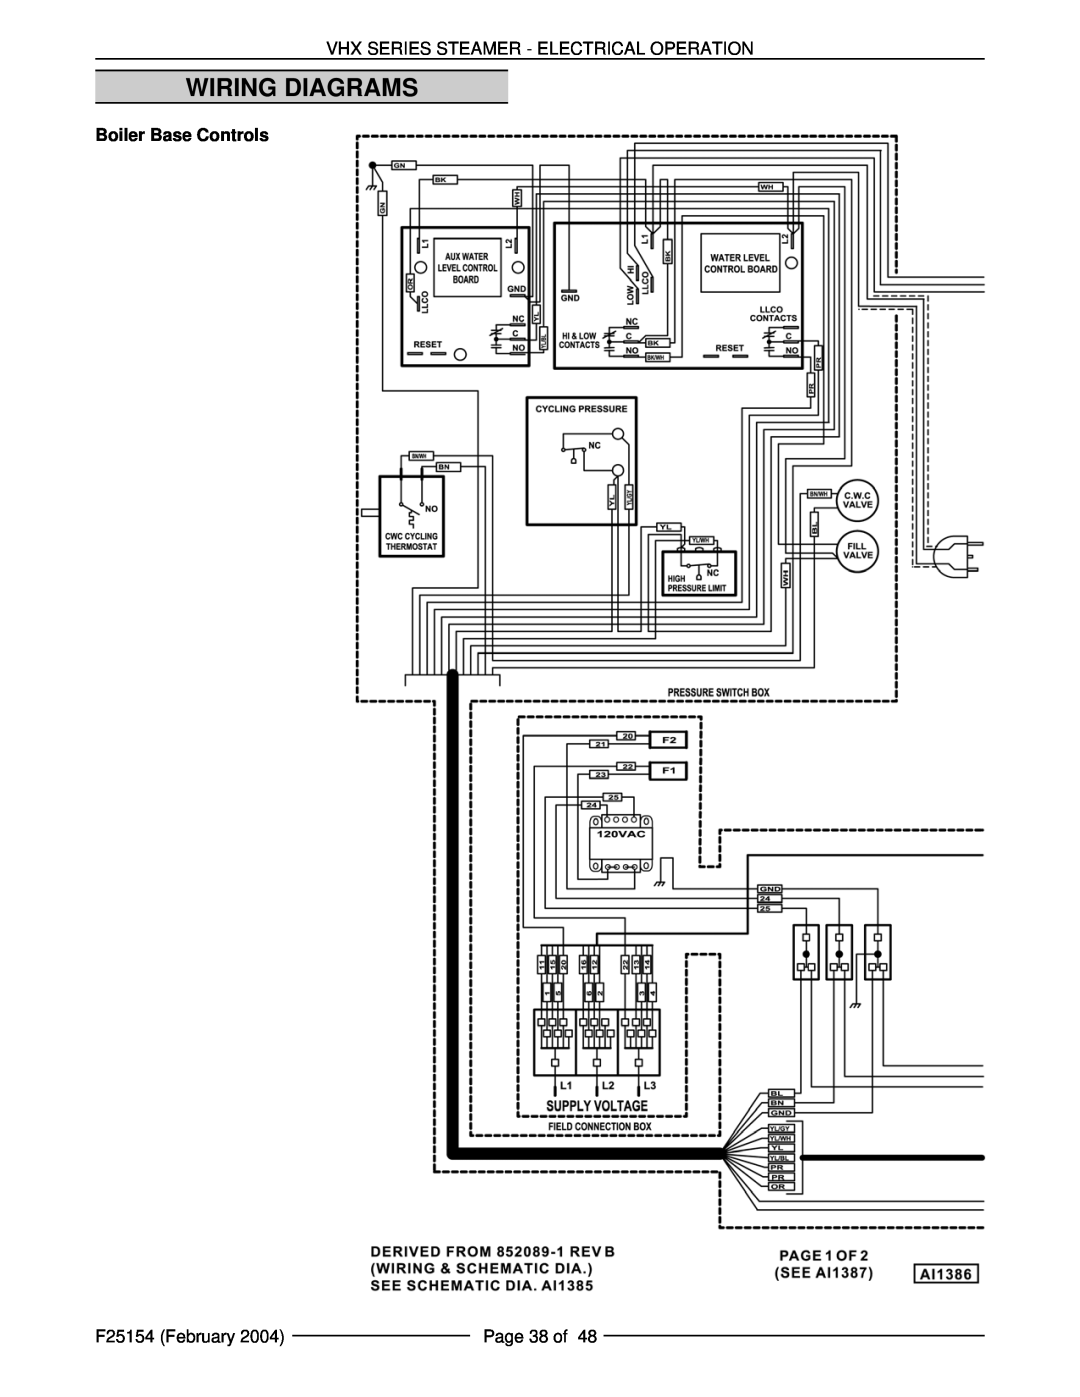 Vulcan-Hart MHB24E manual Wiring Diagrams, Vhx Series Steamer - Electrical Operation, Boiler Base Controls, F25154 February 